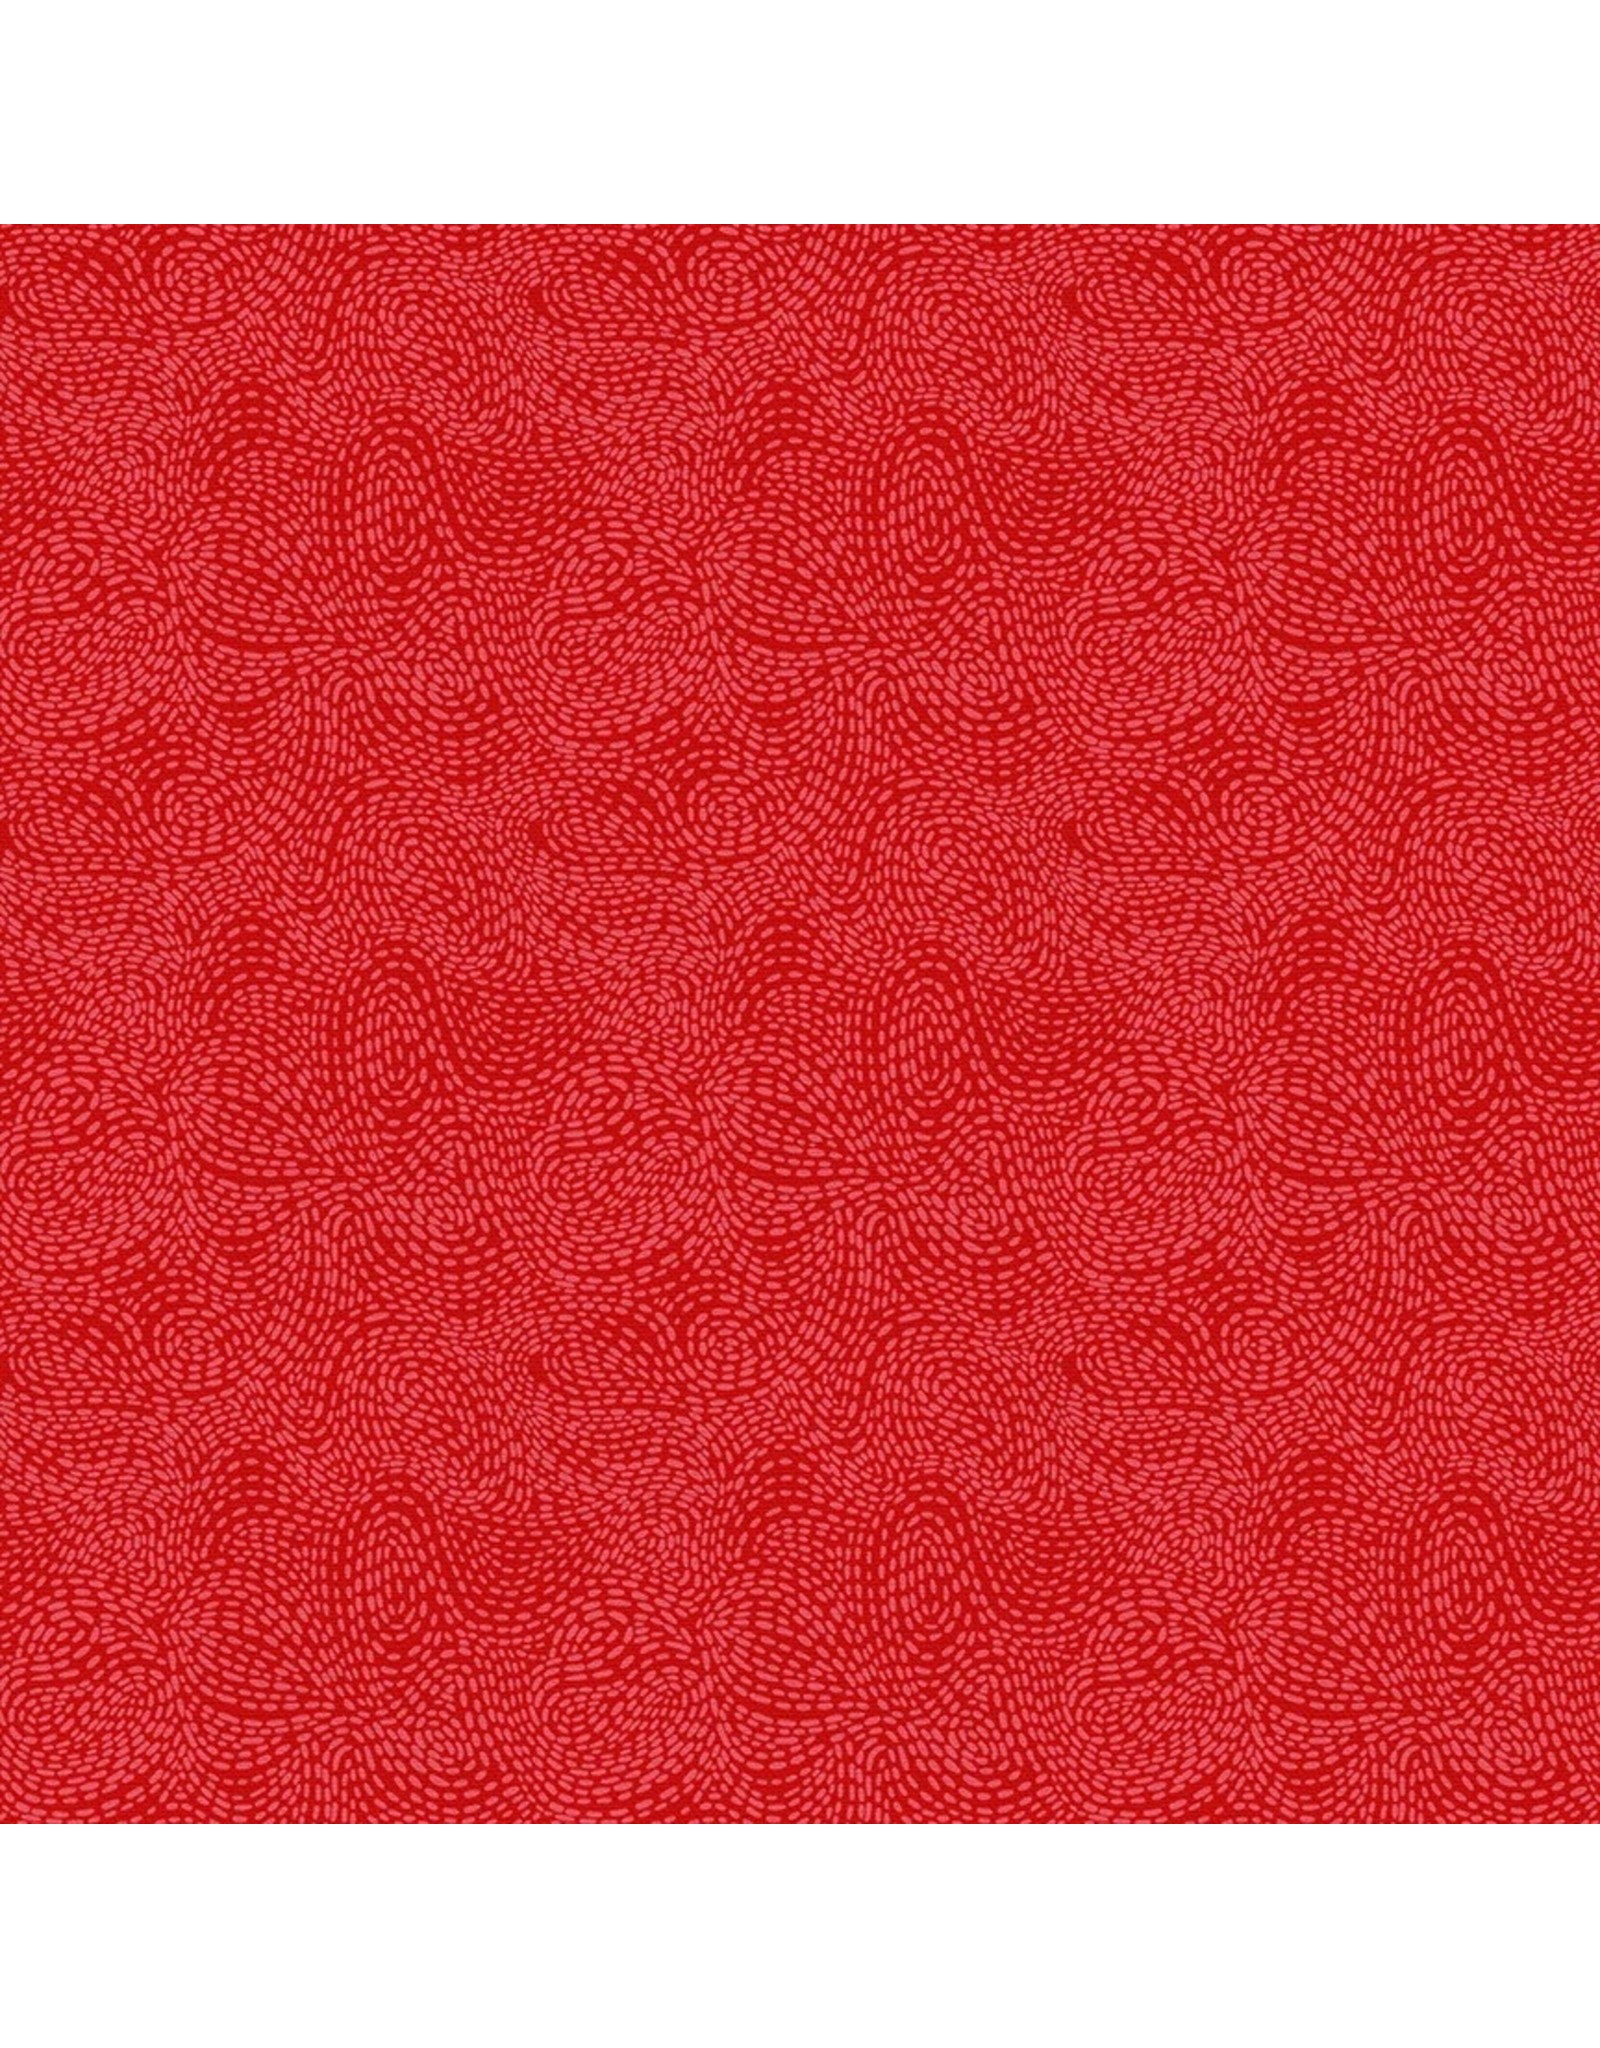 Paintbrush Studio Waved in Red, Fabric Half-Yards